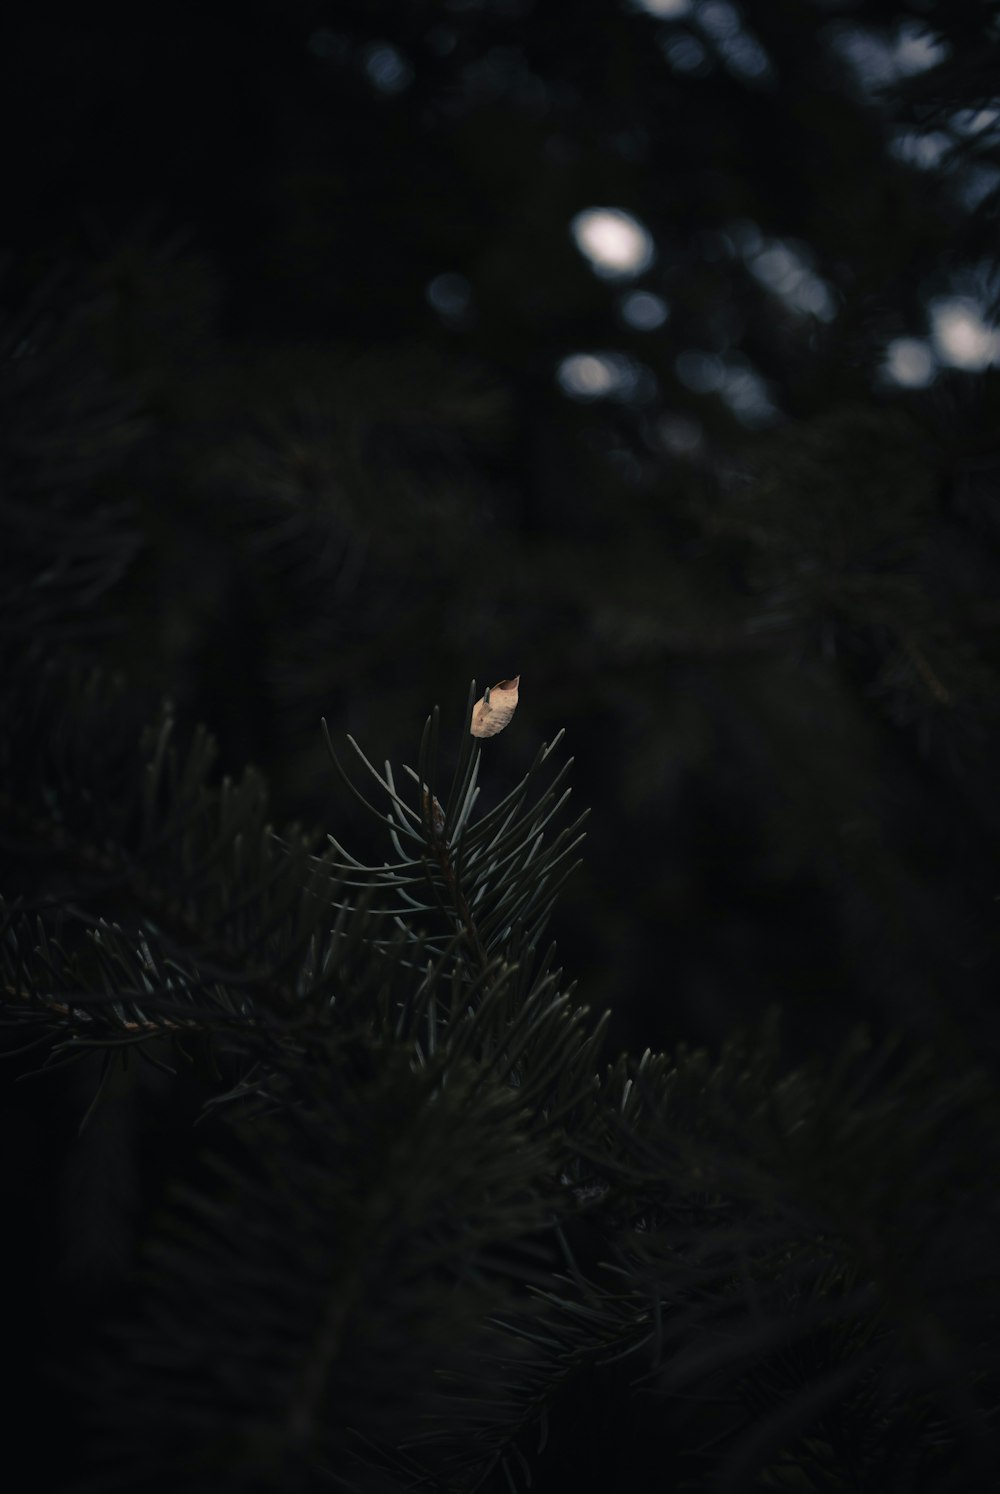 a pine tree with a single leaf on it